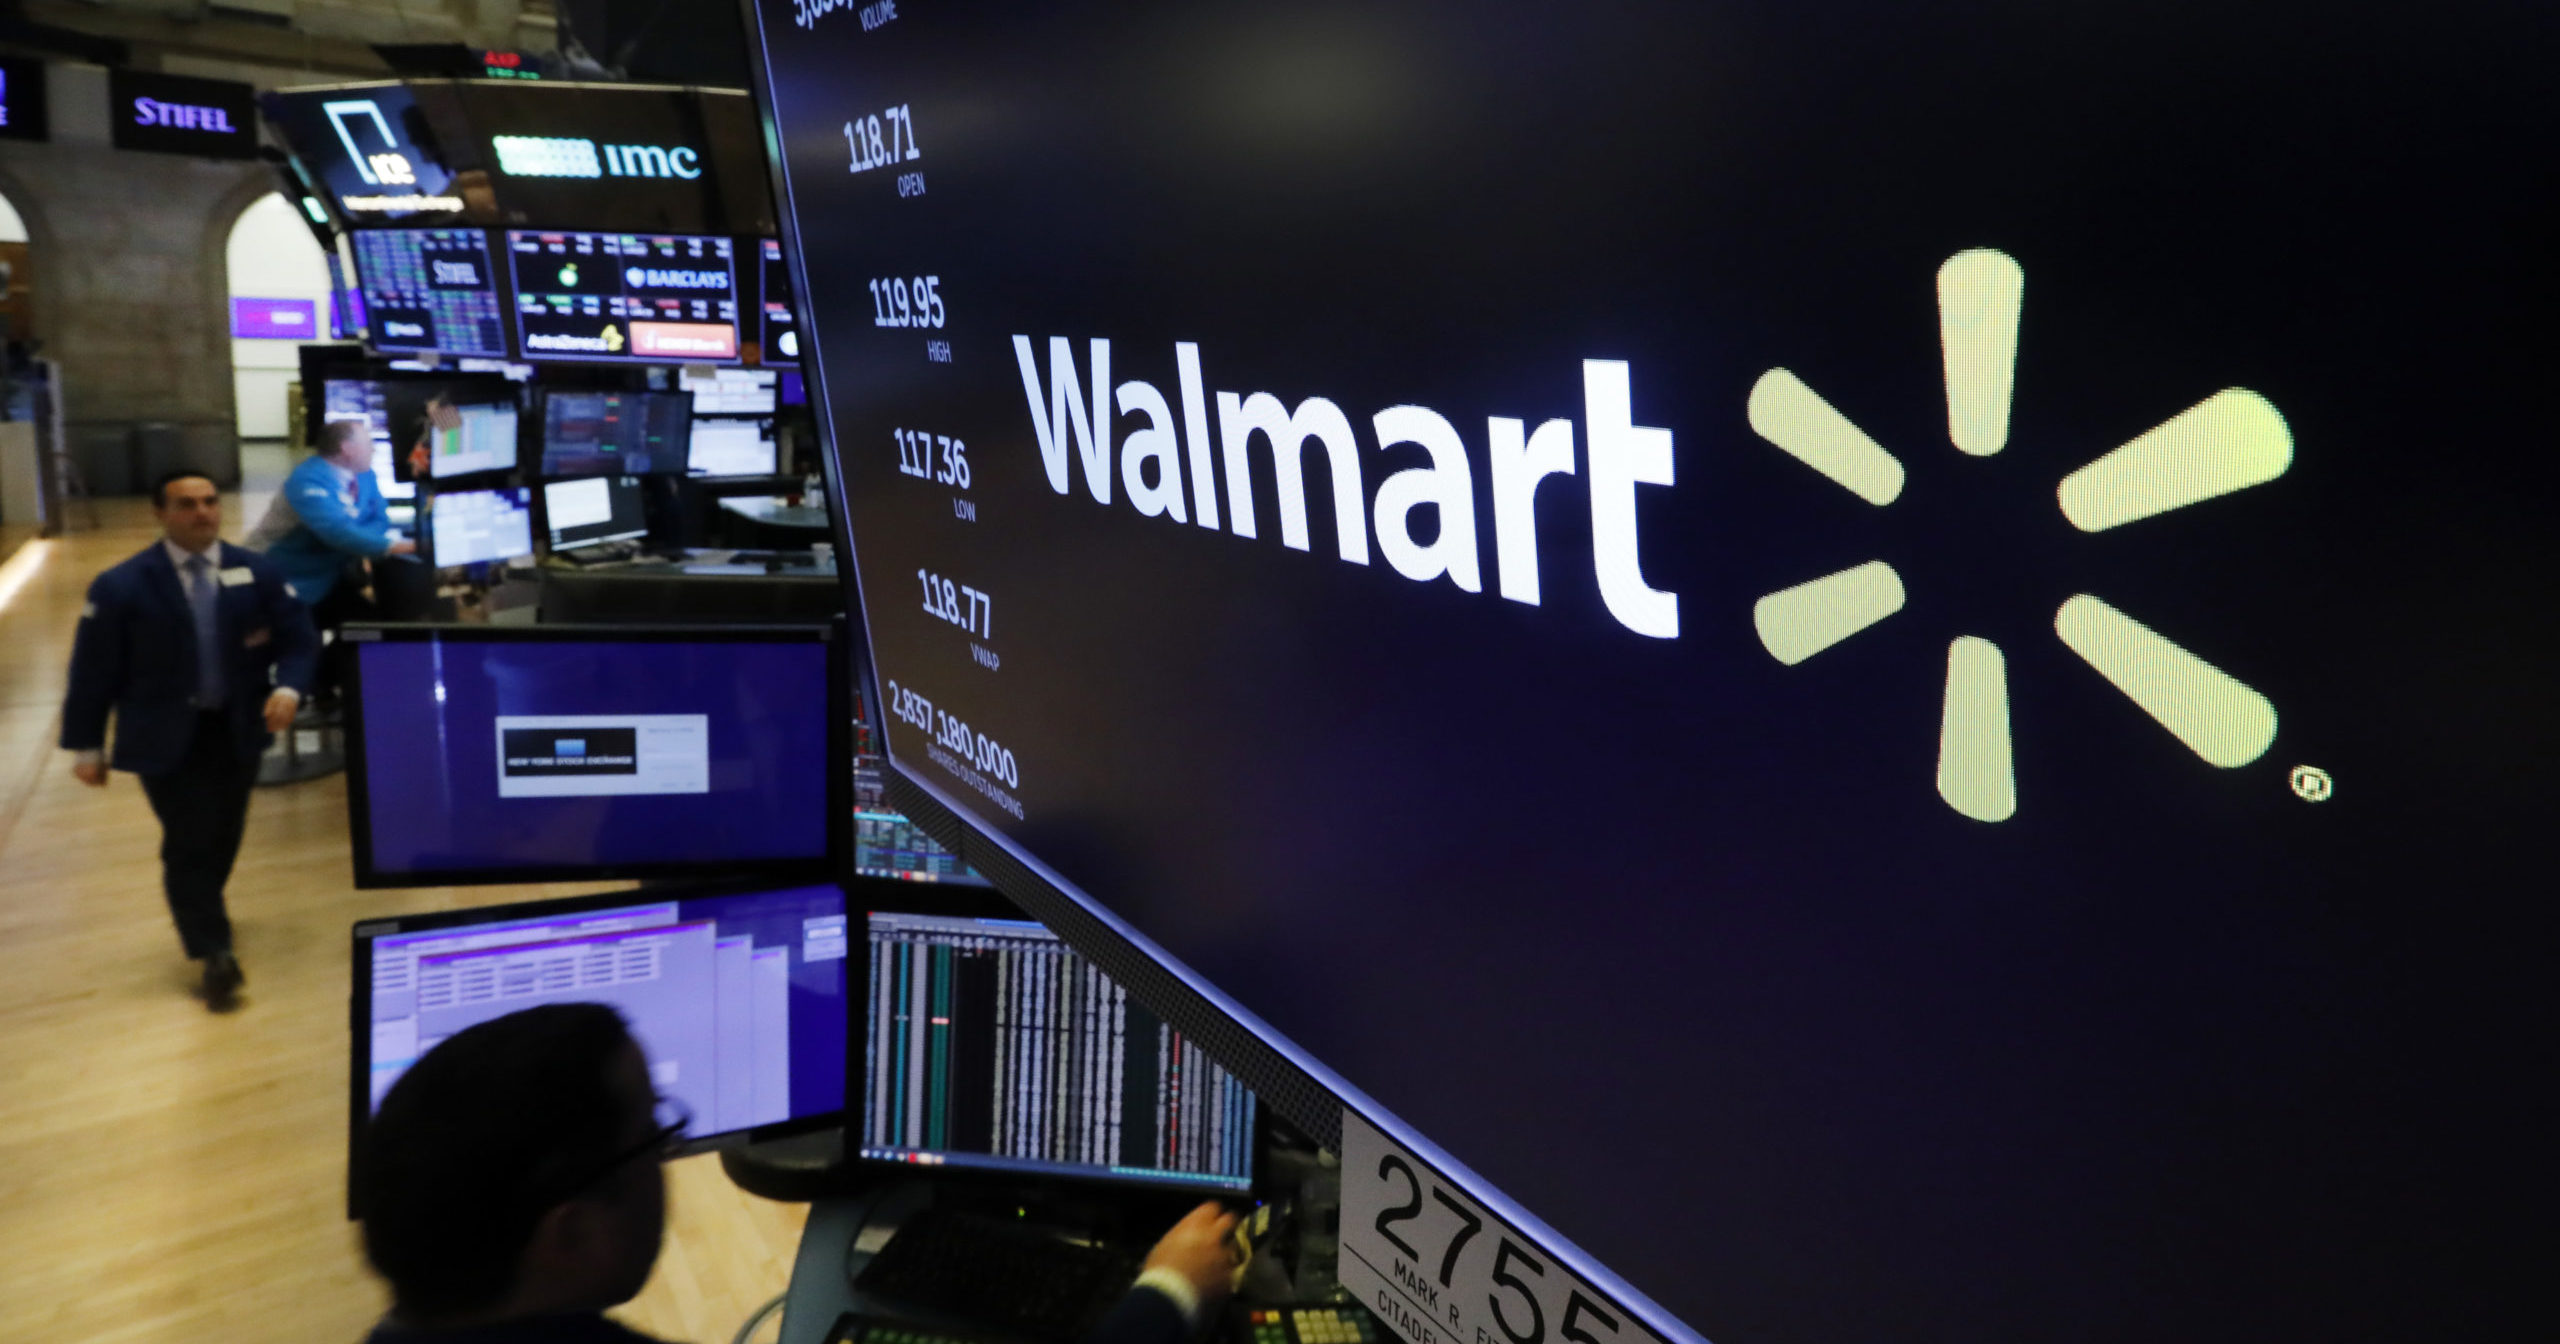 Walmart’s Big News: Credit Card Partnership Update for Shoppers